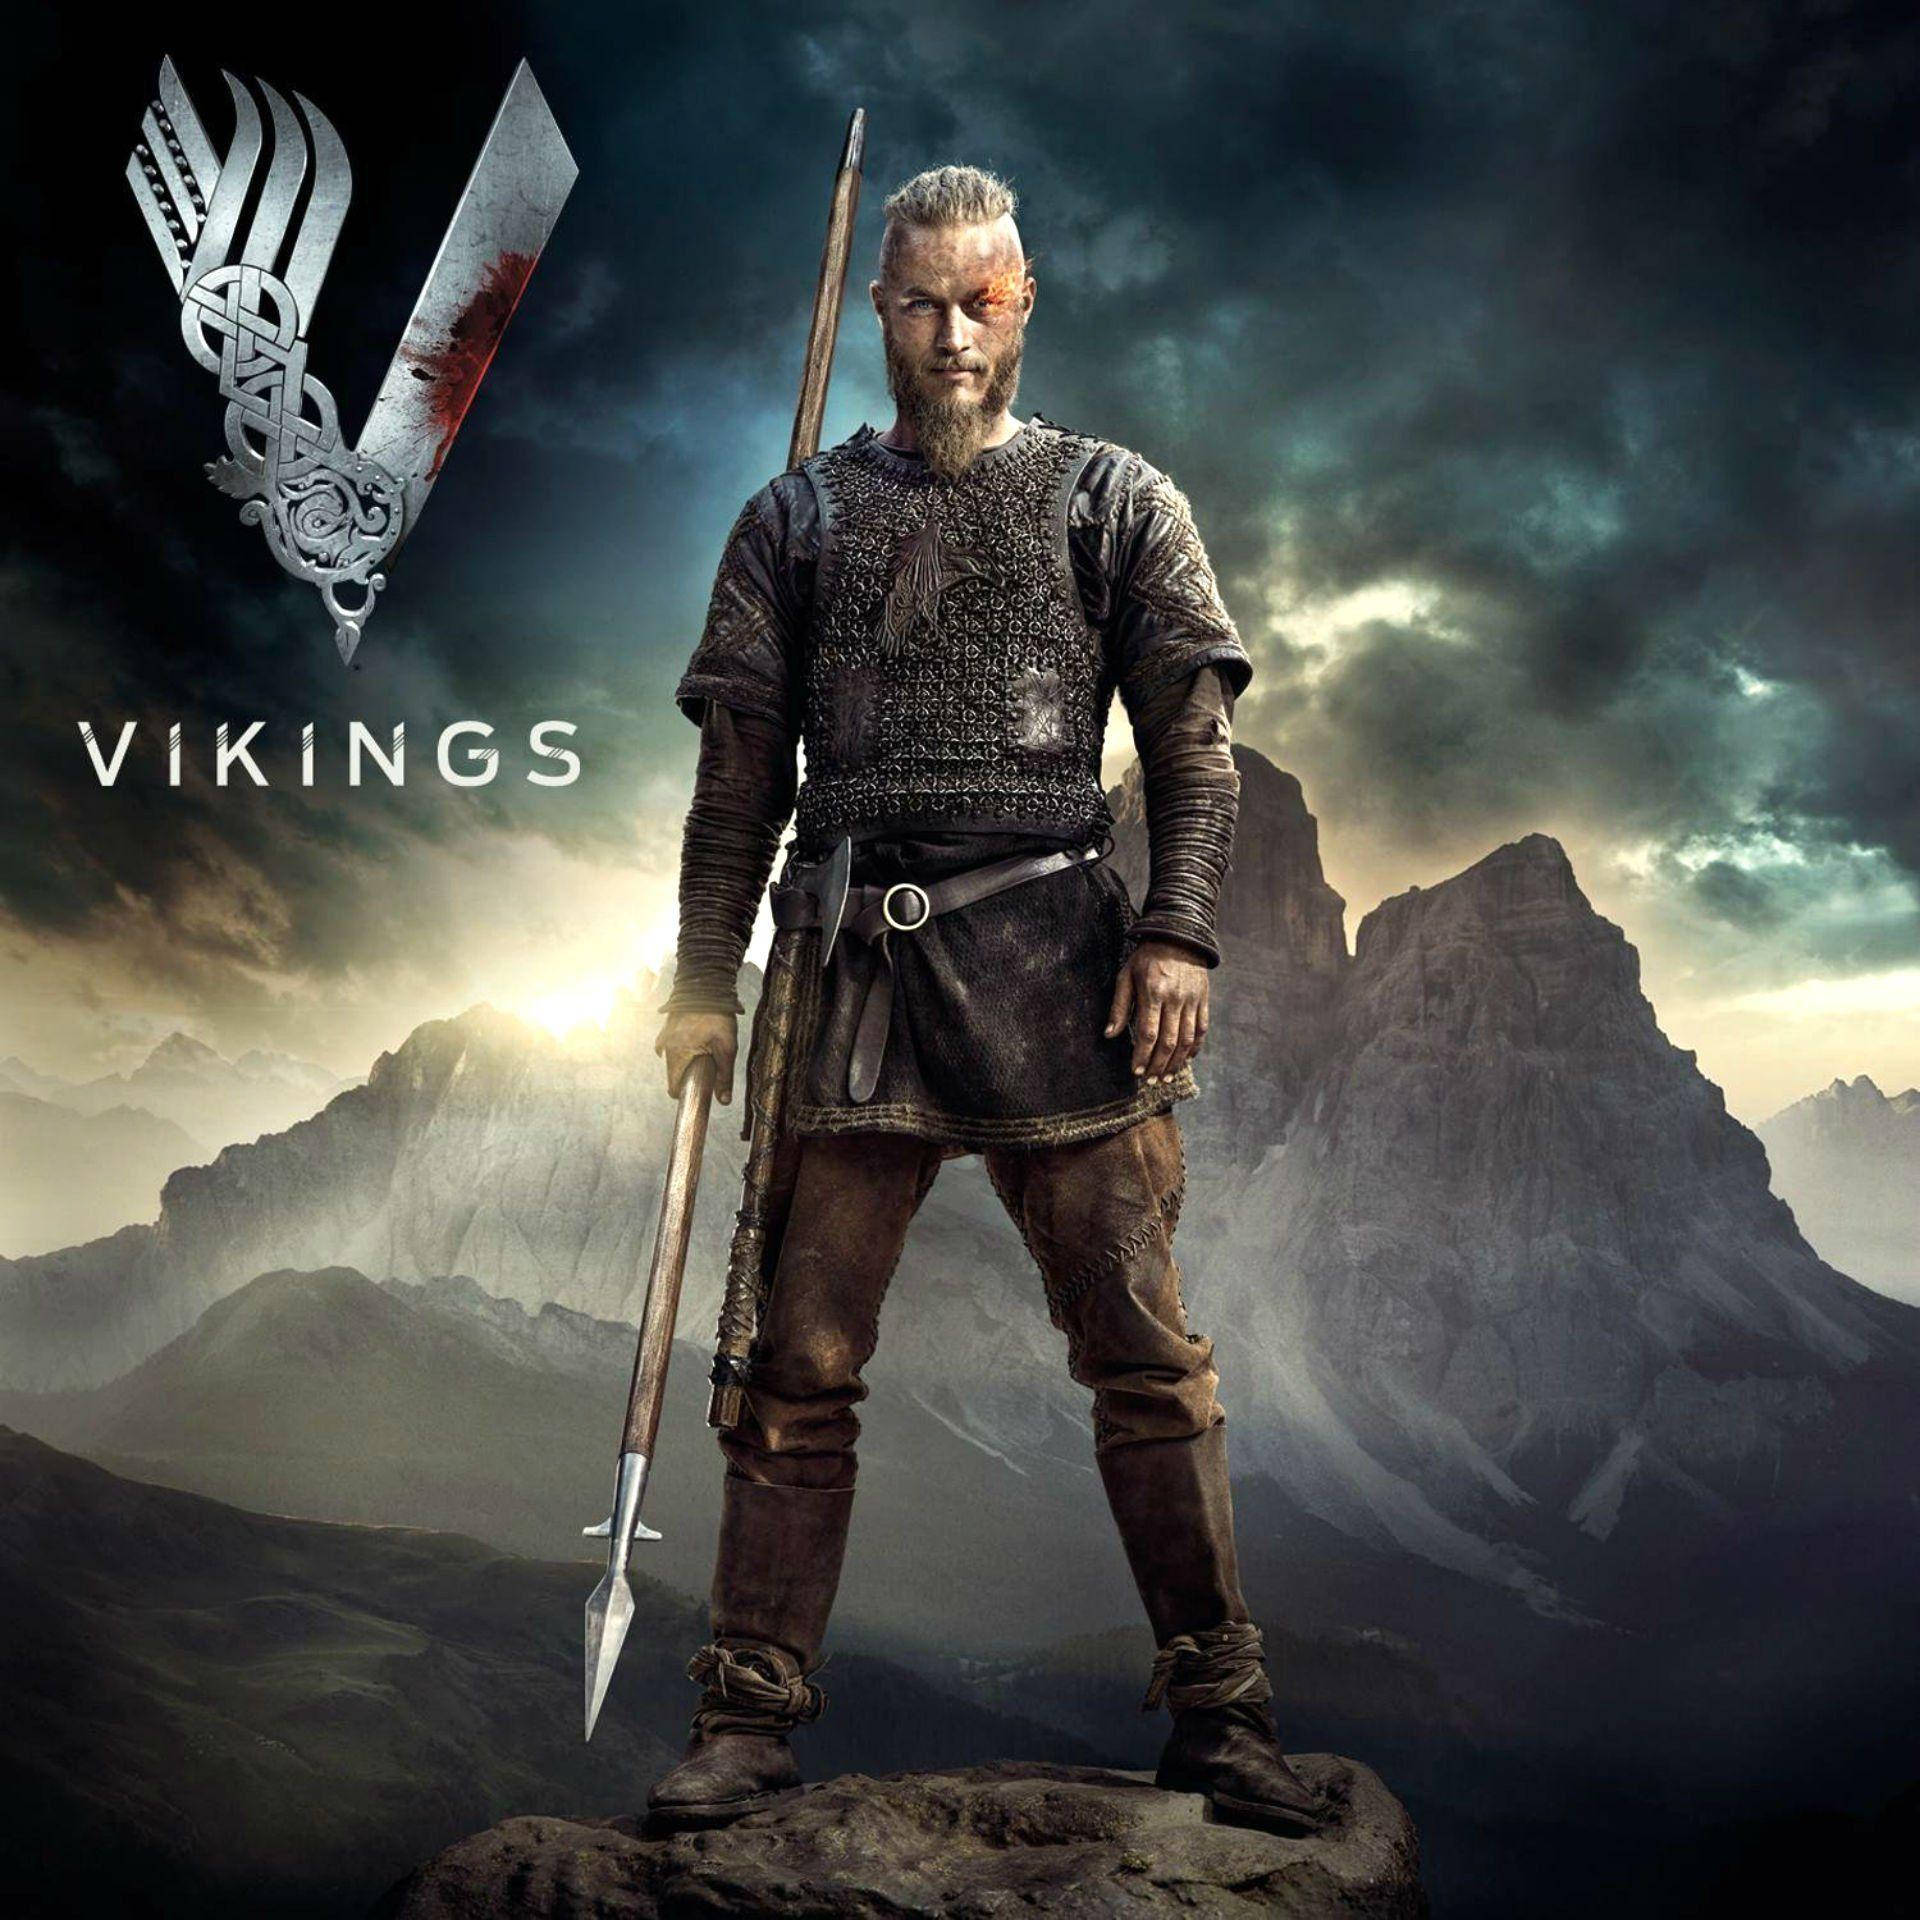 Poster Of Ragnar Lothbrok For Vikings